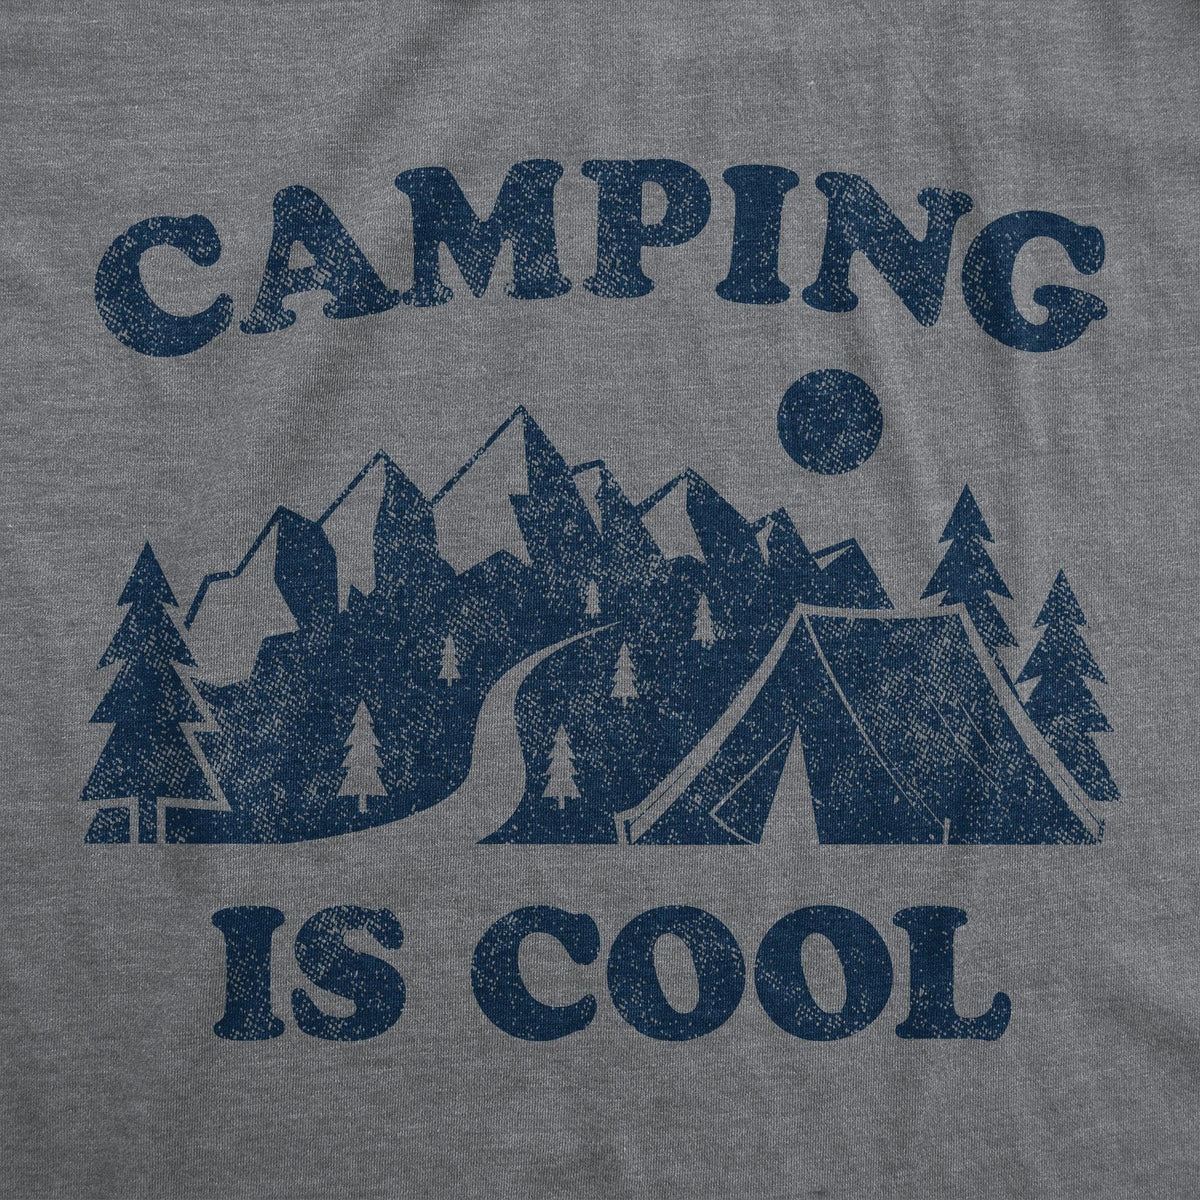 Camping Is Cool Men&#39;s Tshirt  -  Crazy Dog T-Shirts